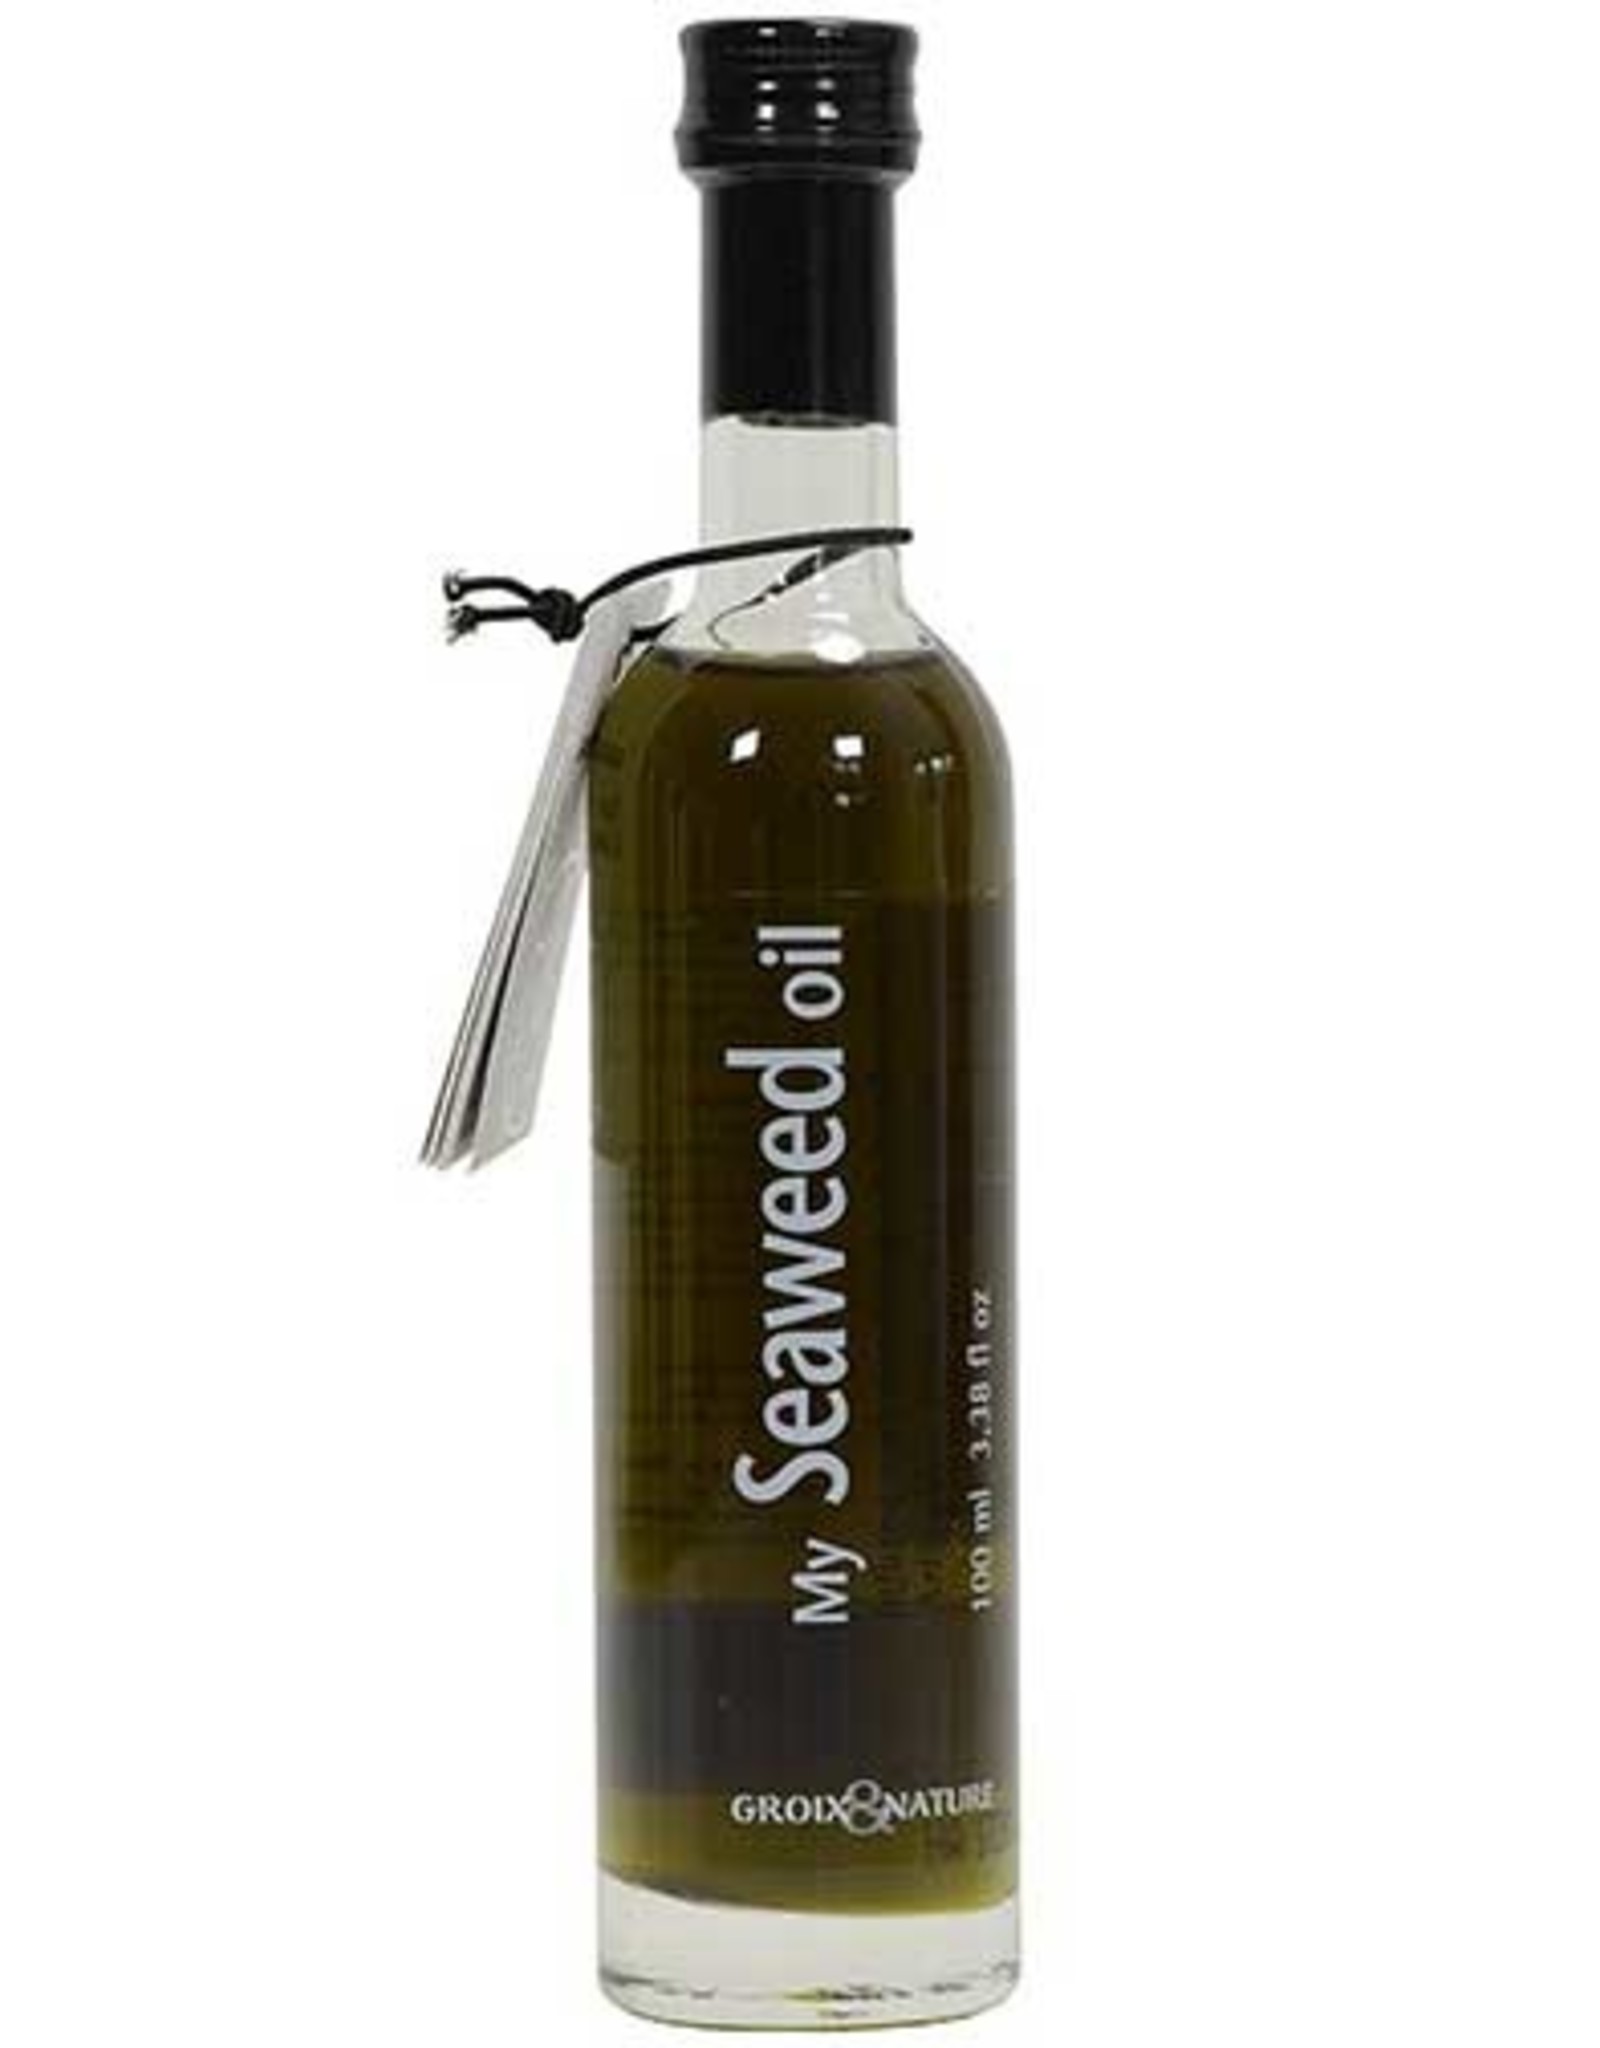 Groix Nature Seaweed oil